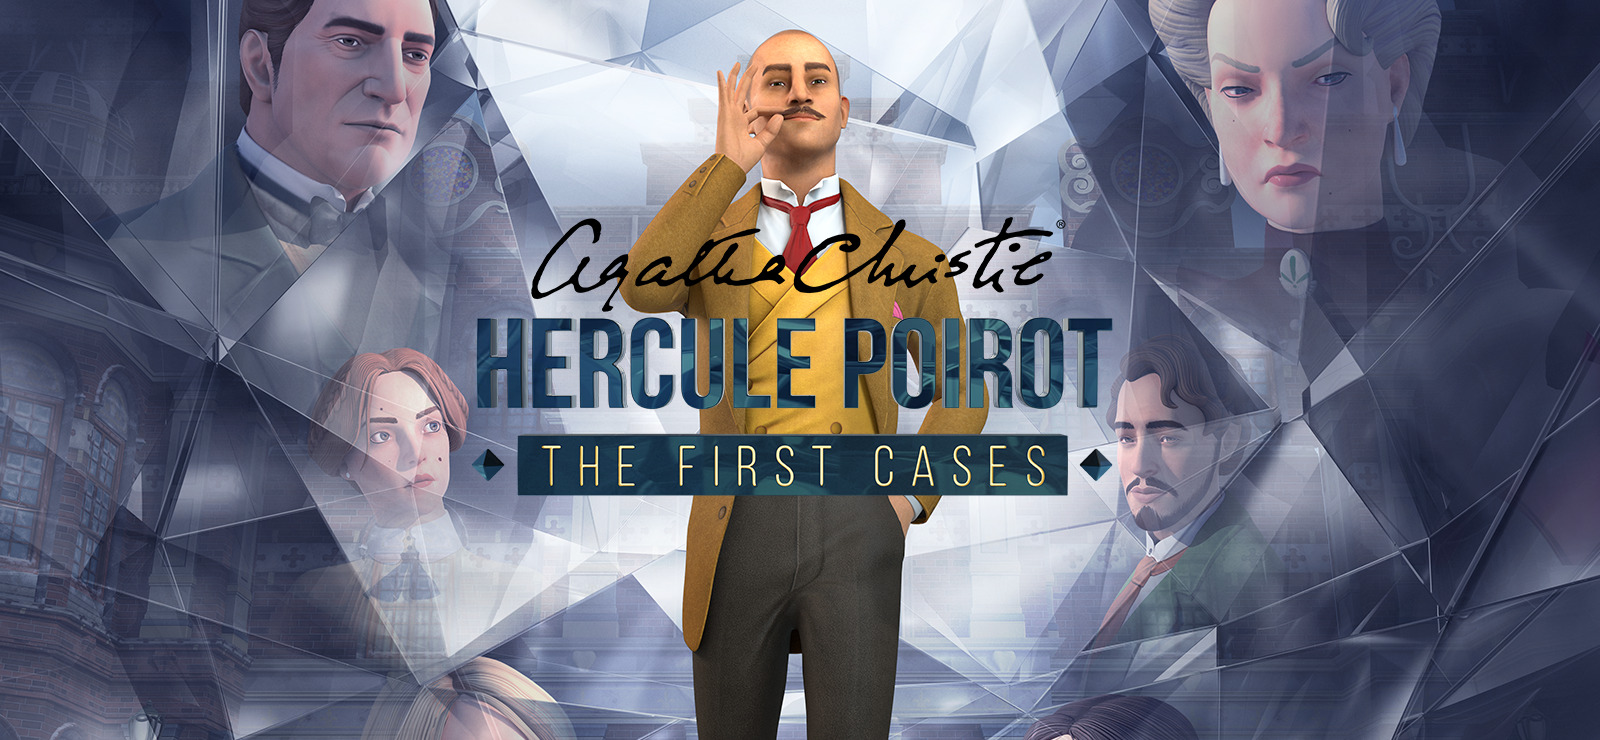 Agatha Christie - Hercule Poirot: The First Cases on GOG.com